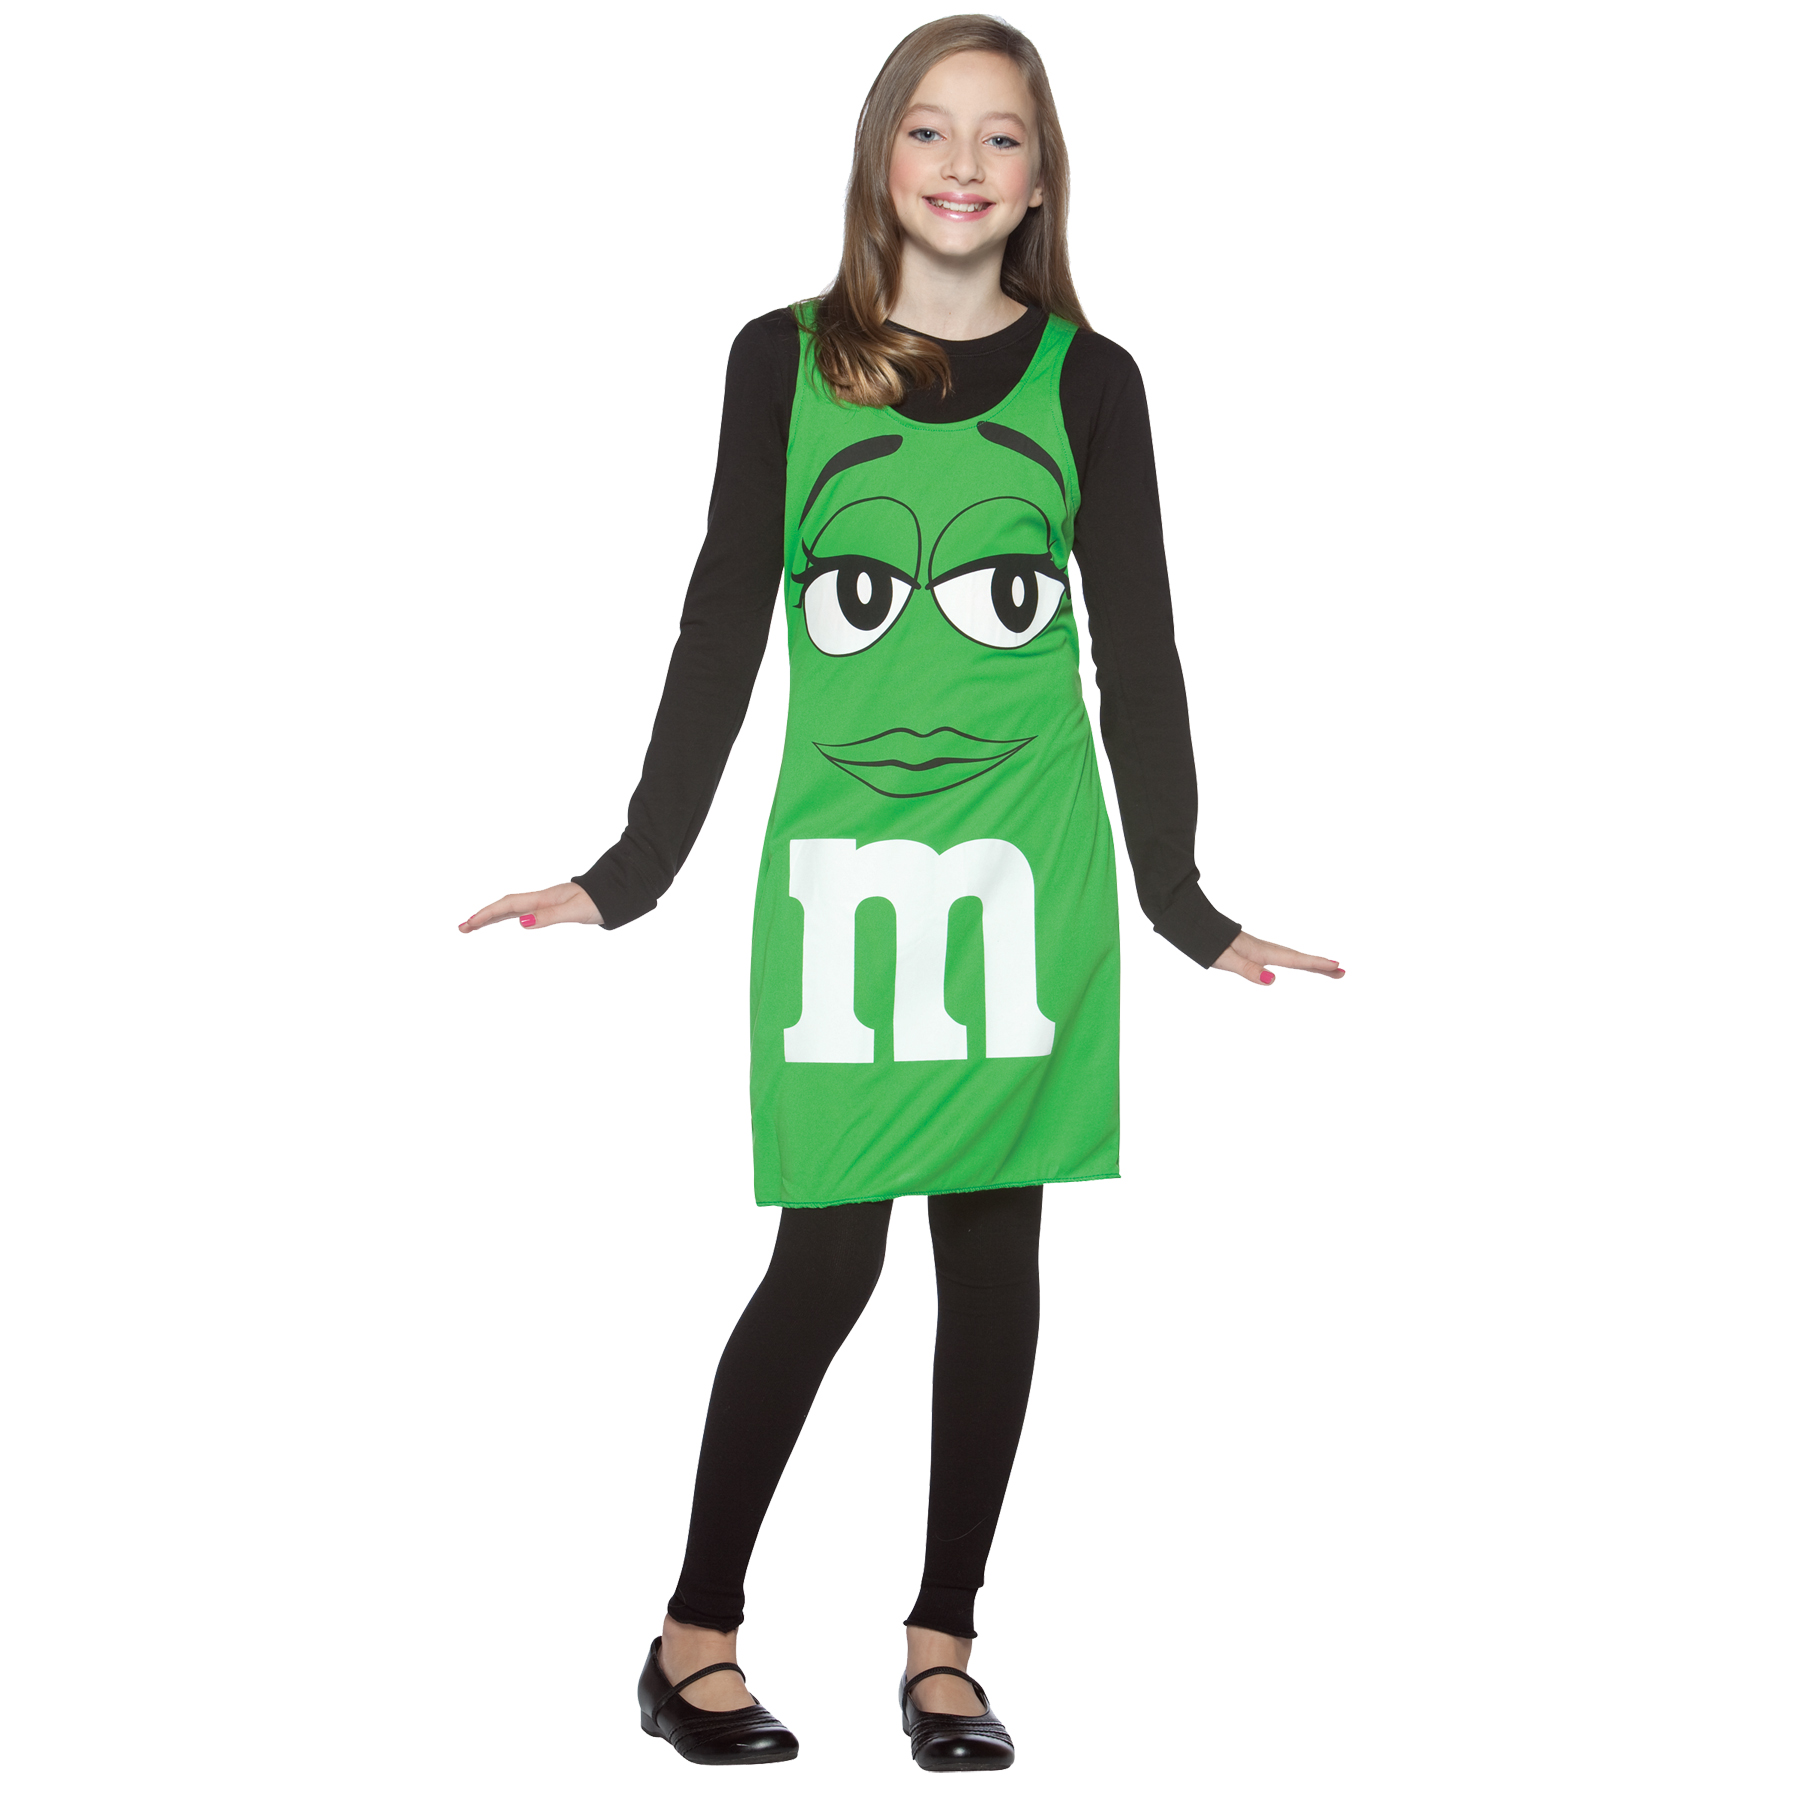 Women's M&M Green Tank Dress Costume